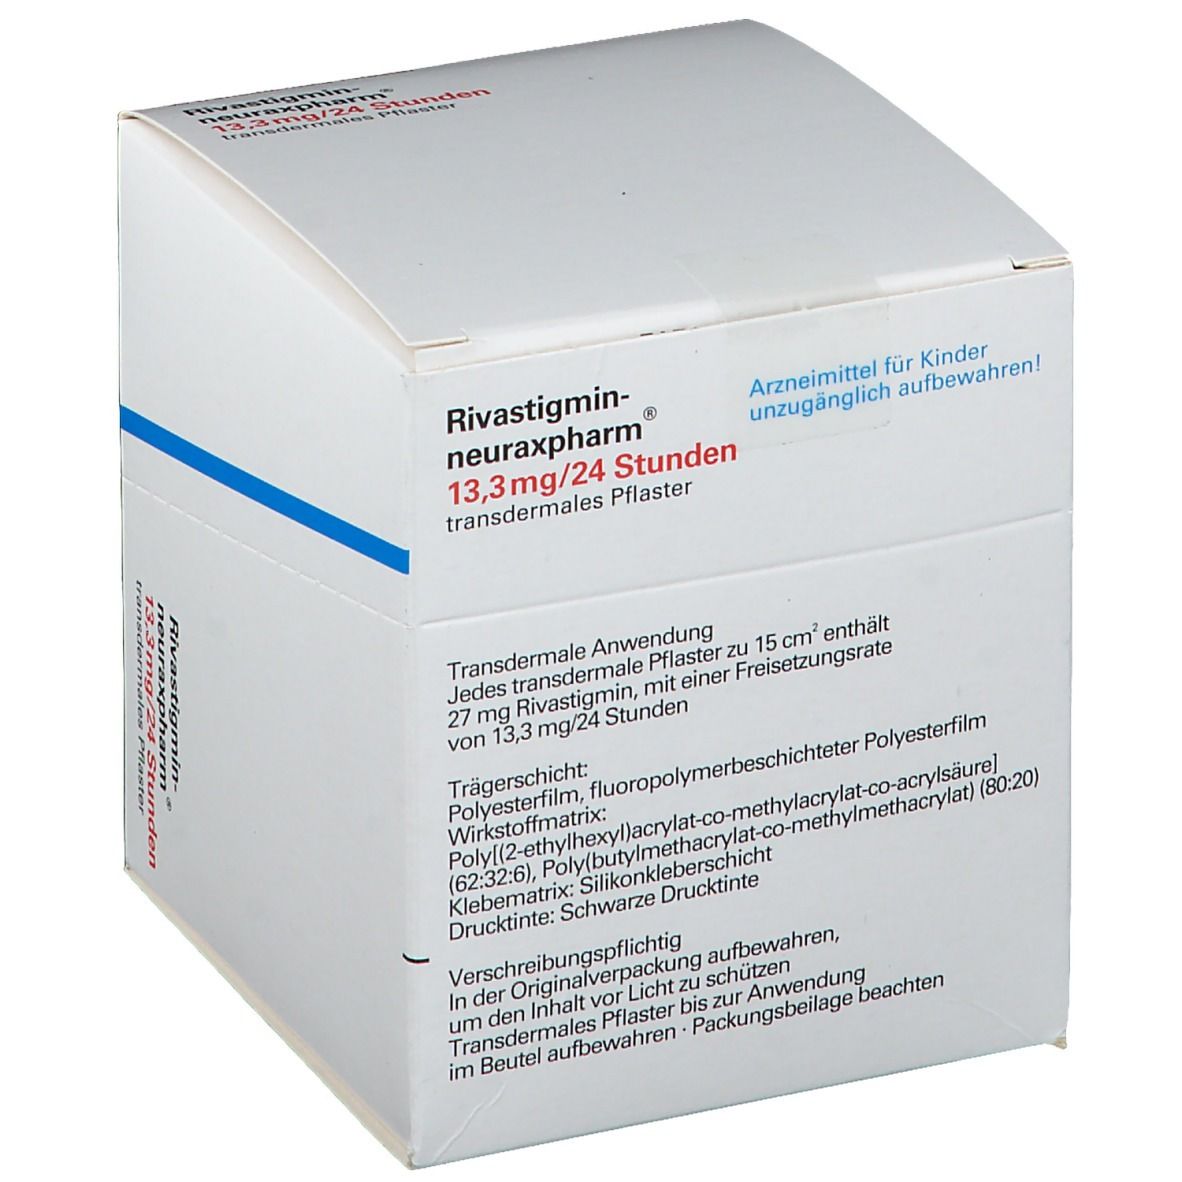 Rivastigmin-neuraxpharm® 13,3 mg/24 Stunden